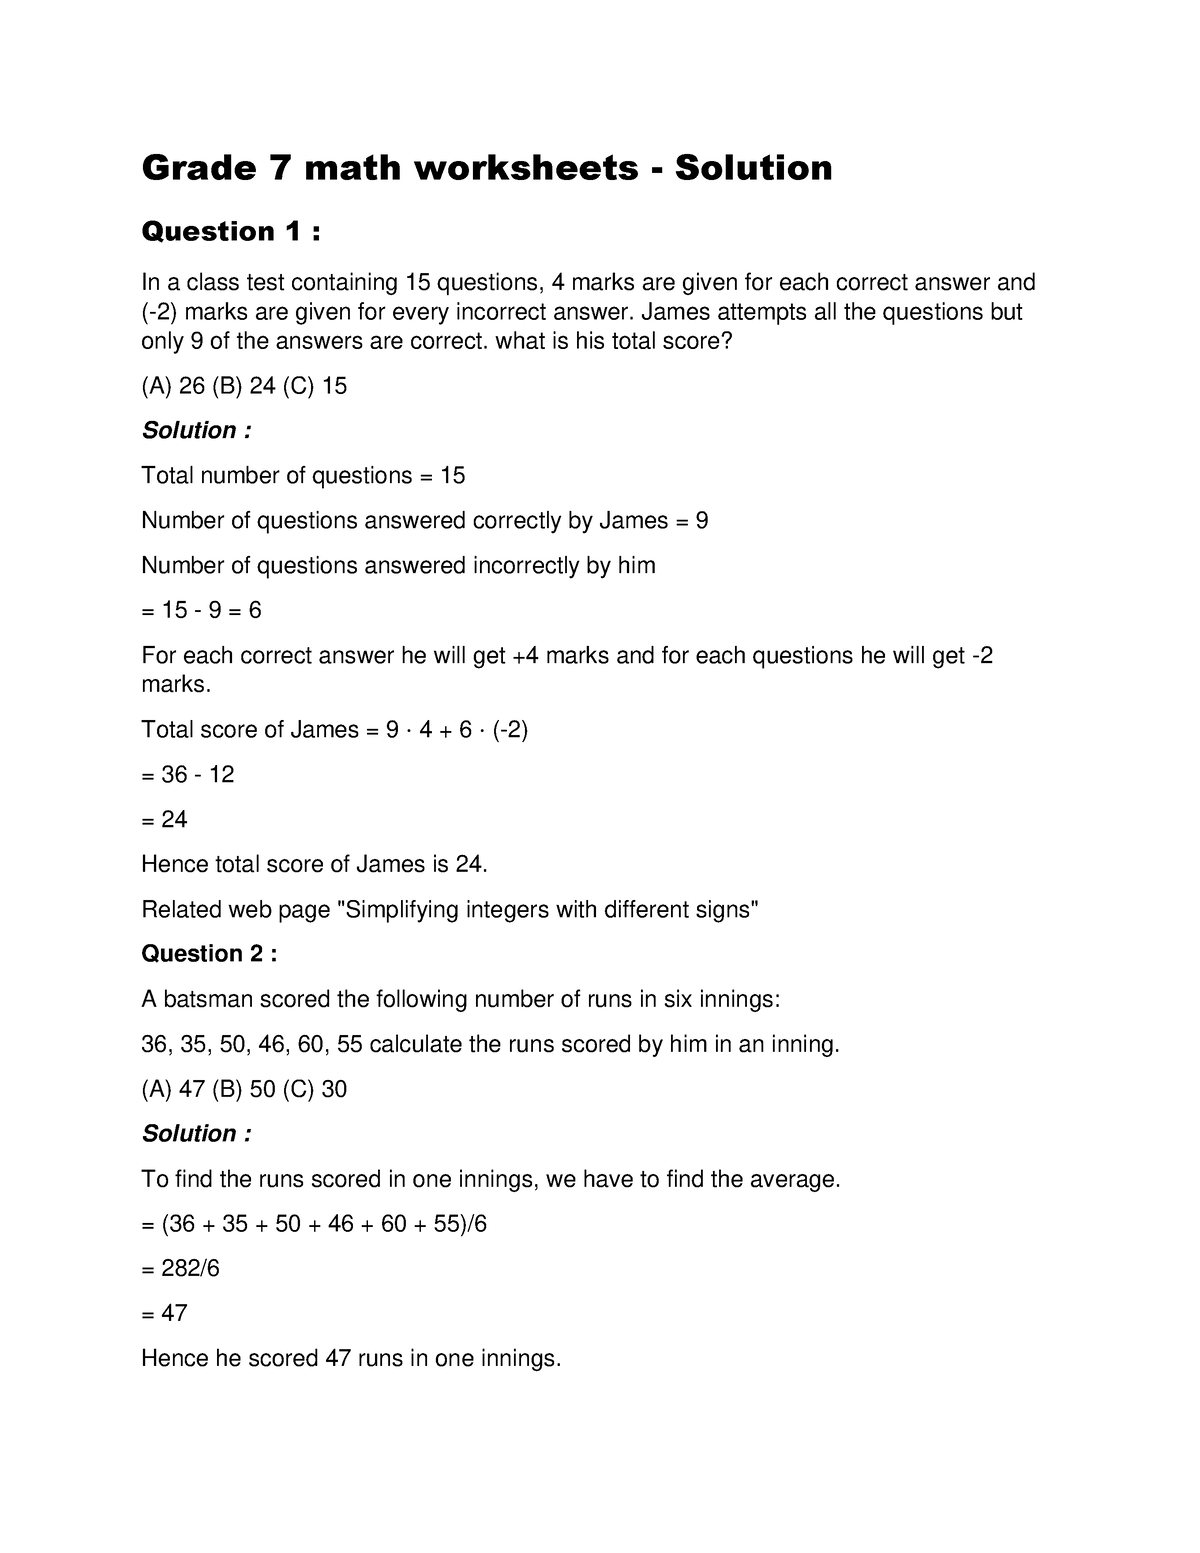 Grade 7 Math Worksheets Grade 7 Math Worksheets Solution Question 1 